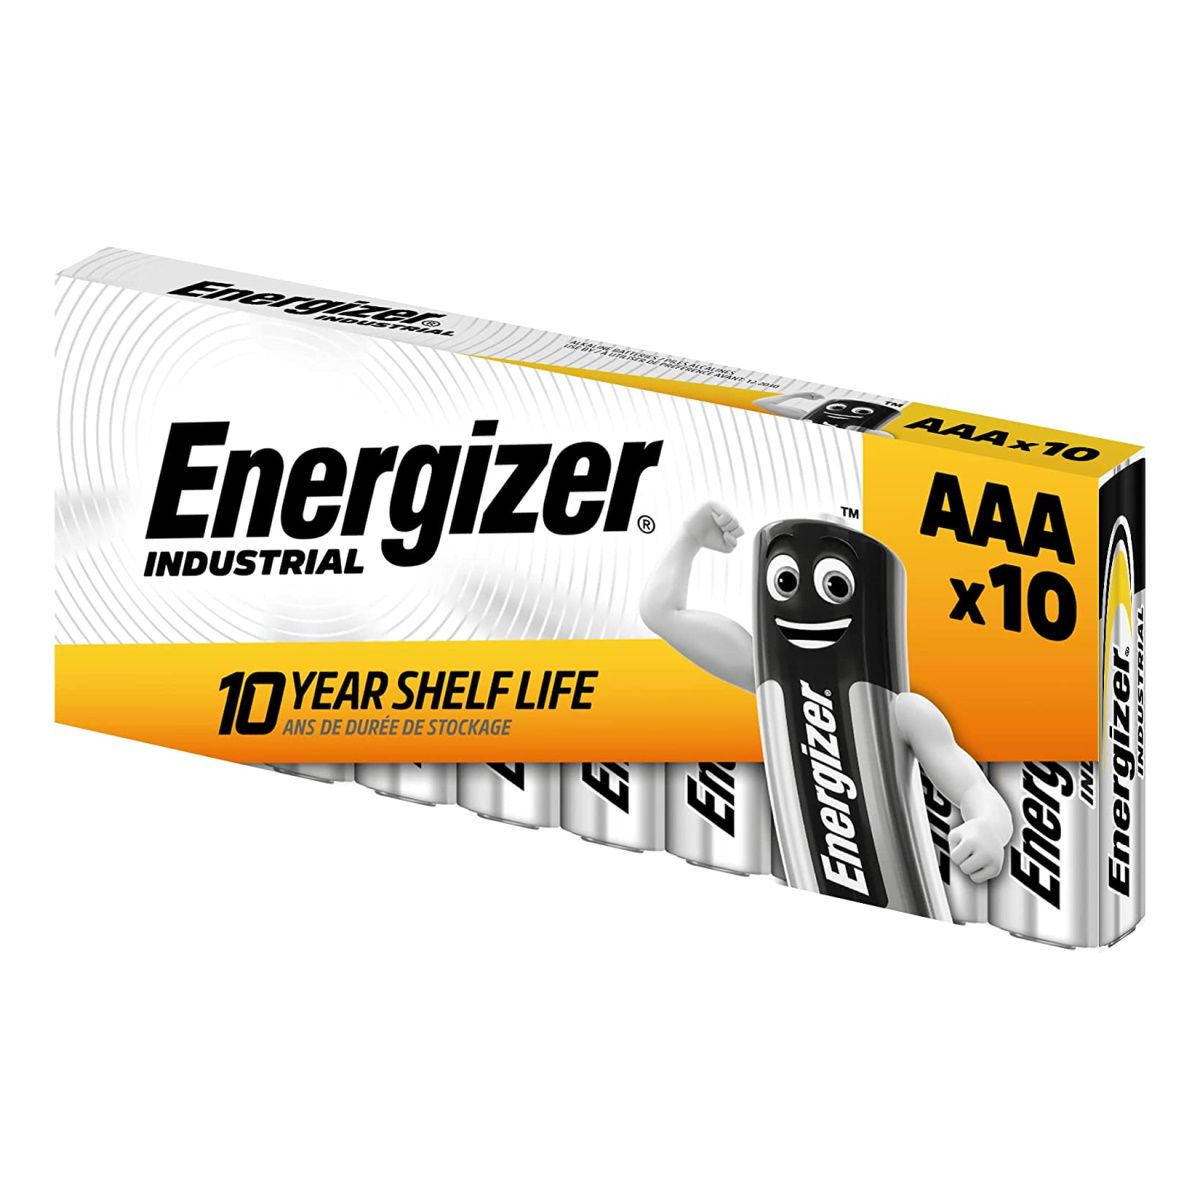 Energizer Industrial AAA LR03 Alkaline Batteries - Box of 10